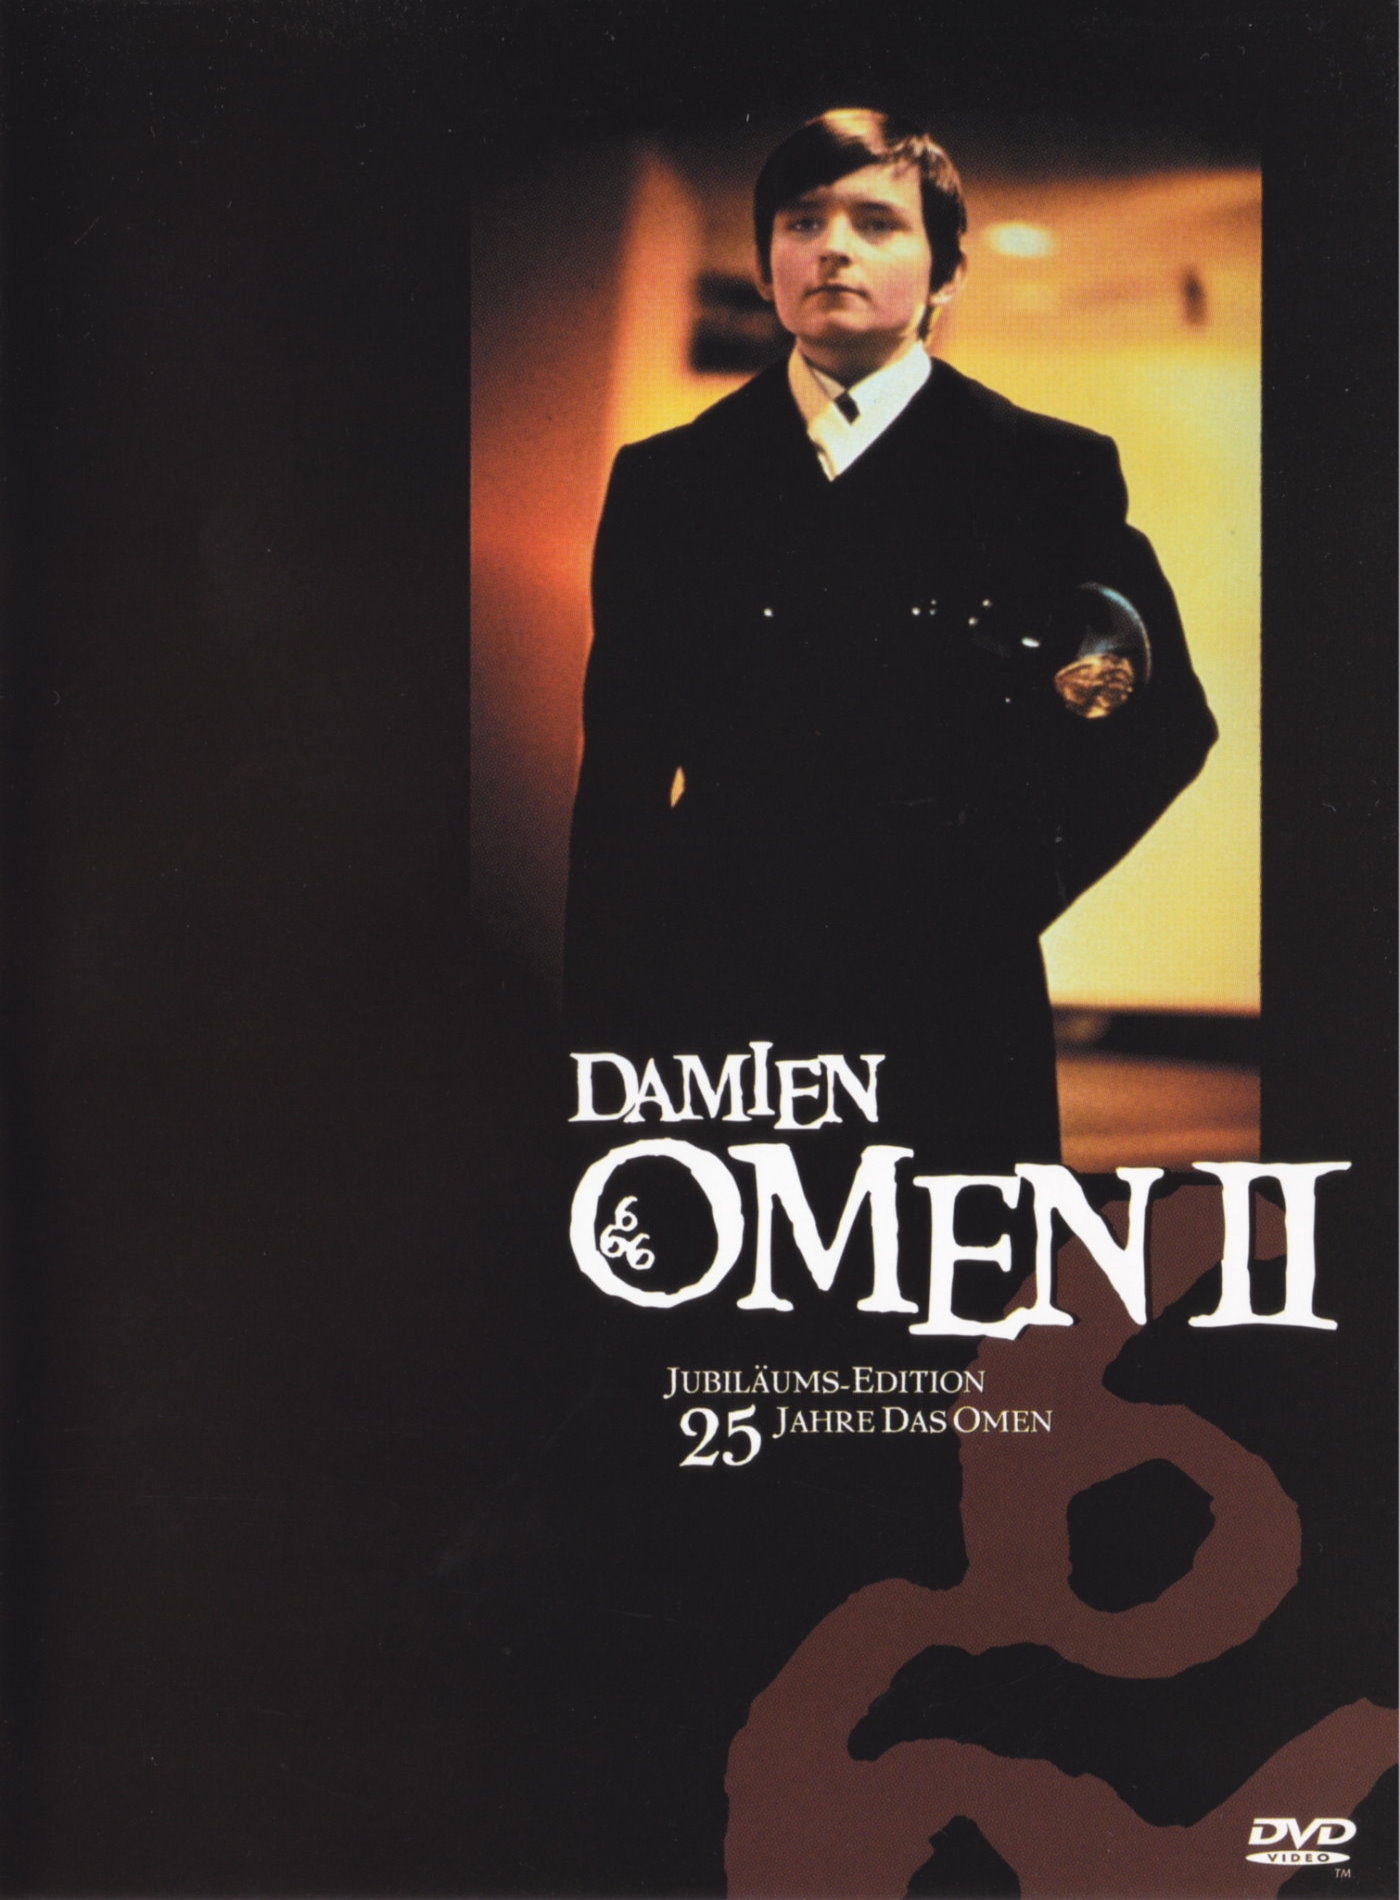 Cover - Damien - Omen II.jpg